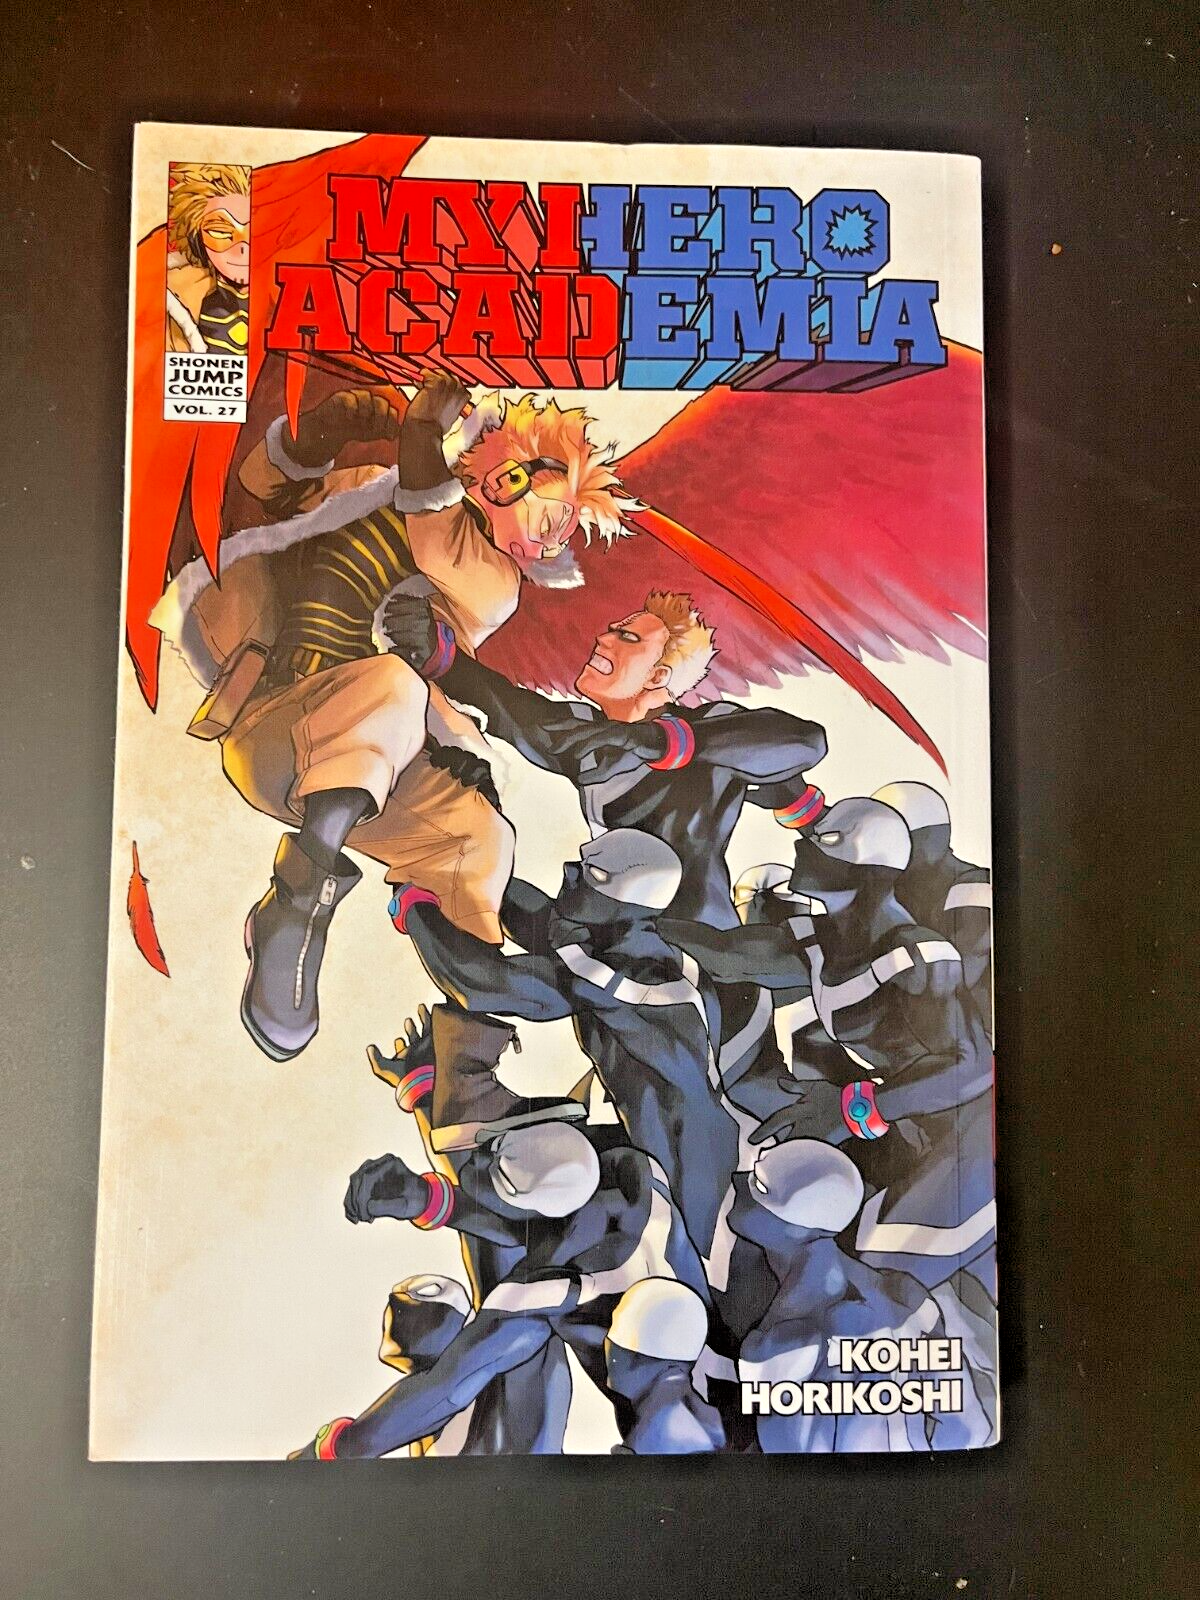 My Hero Academia, Vol. 4, 10, 26, 27, 29 - Paperback By Horikoshi, Kohei - GOOD